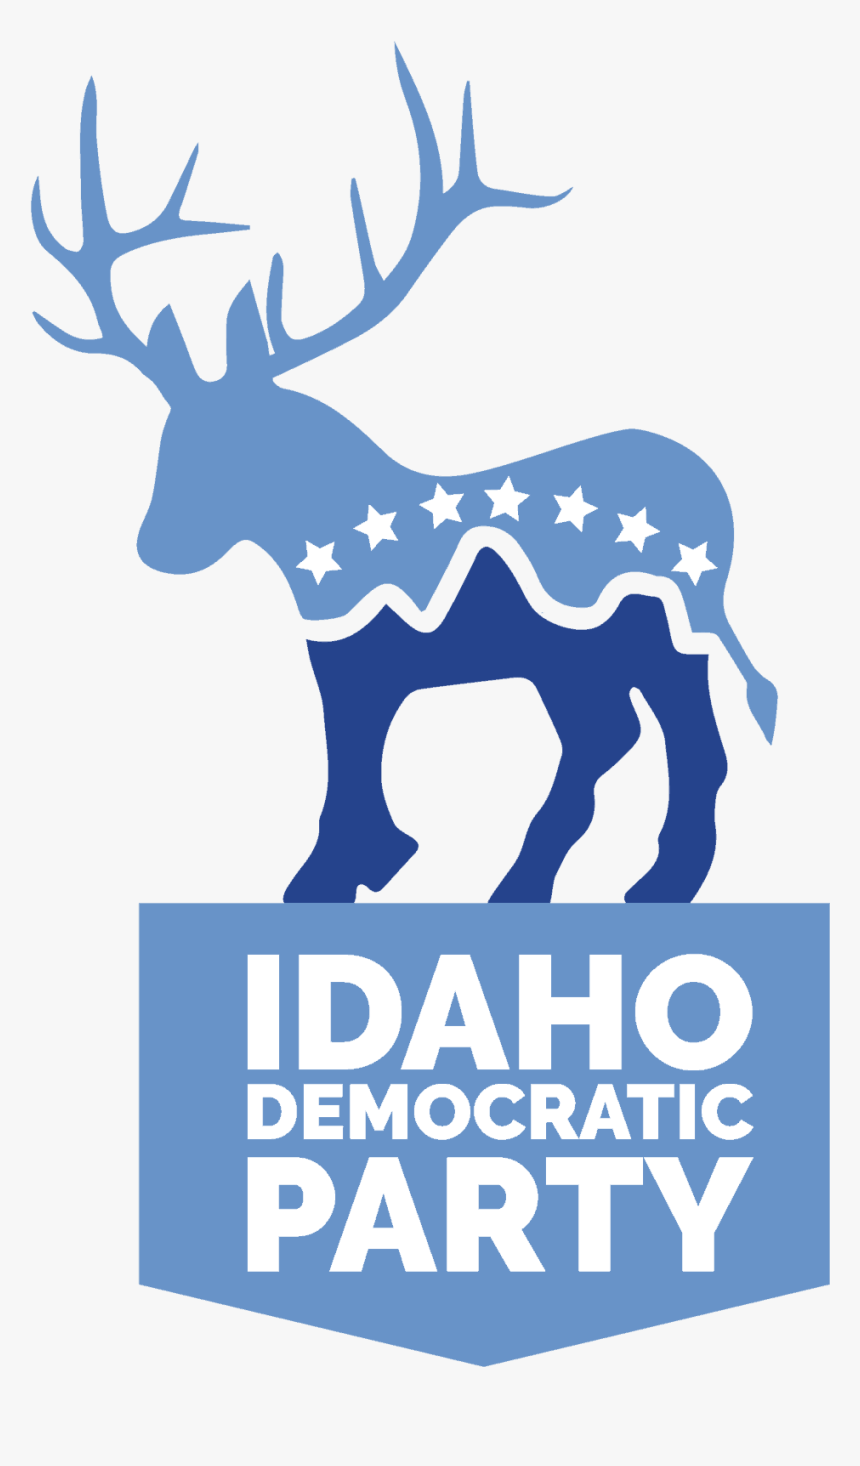 View Larger Image - Idaho Democratic Party Logo, HD Png Download, Free Download